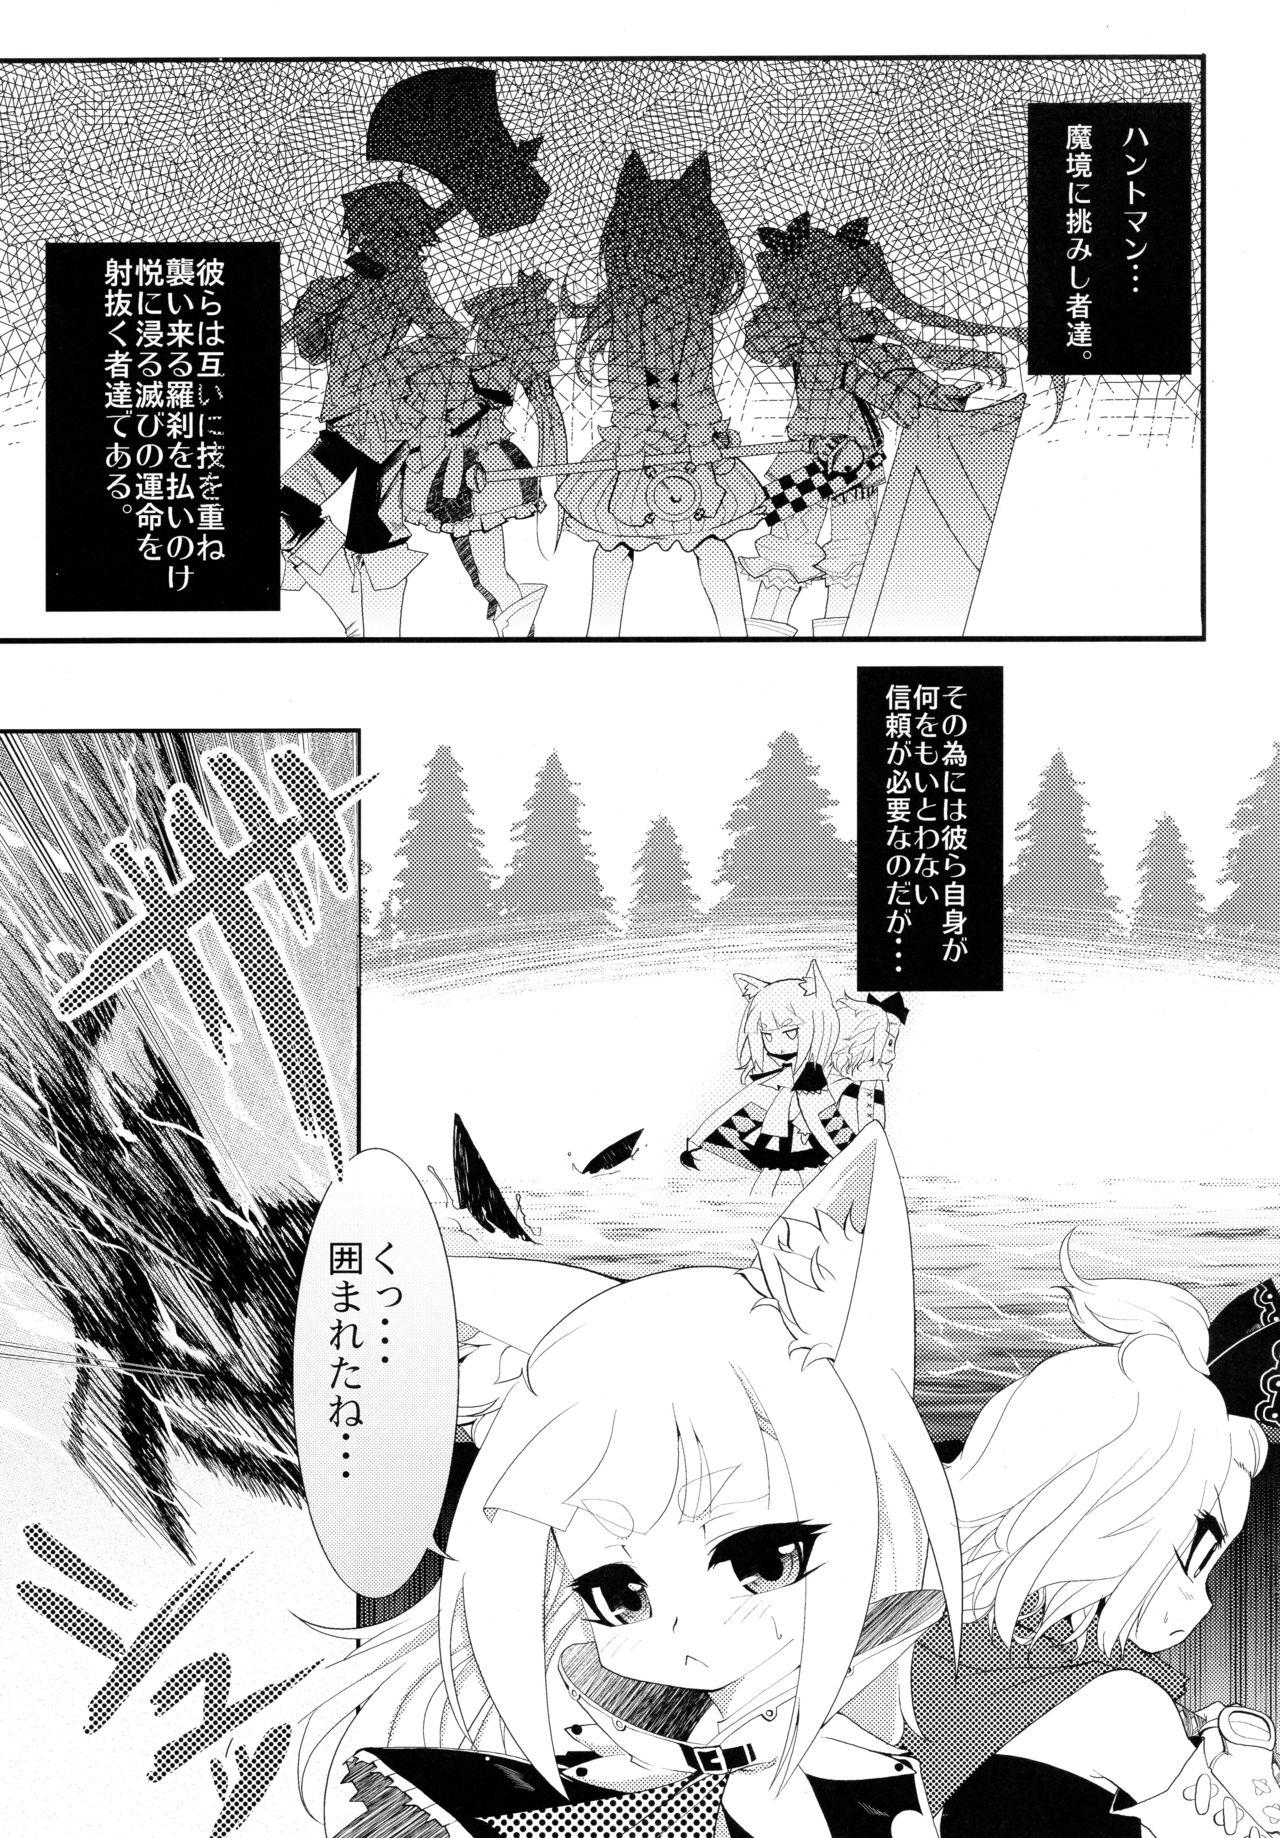 Foda NEXUS 4 - 7th dragon Caught - Page 2